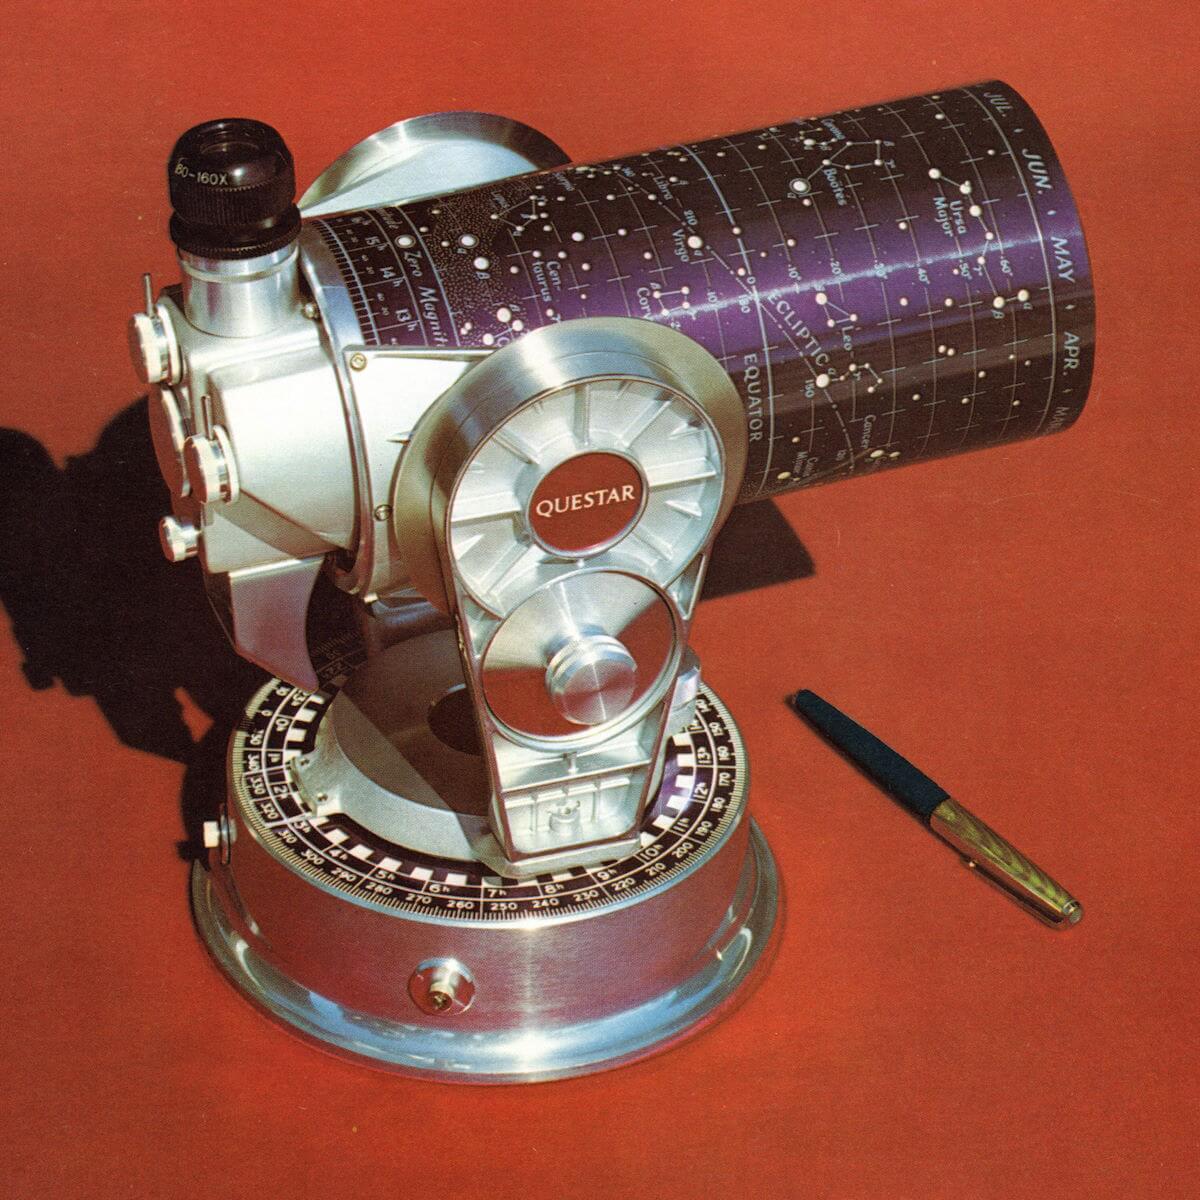 Questar telescope